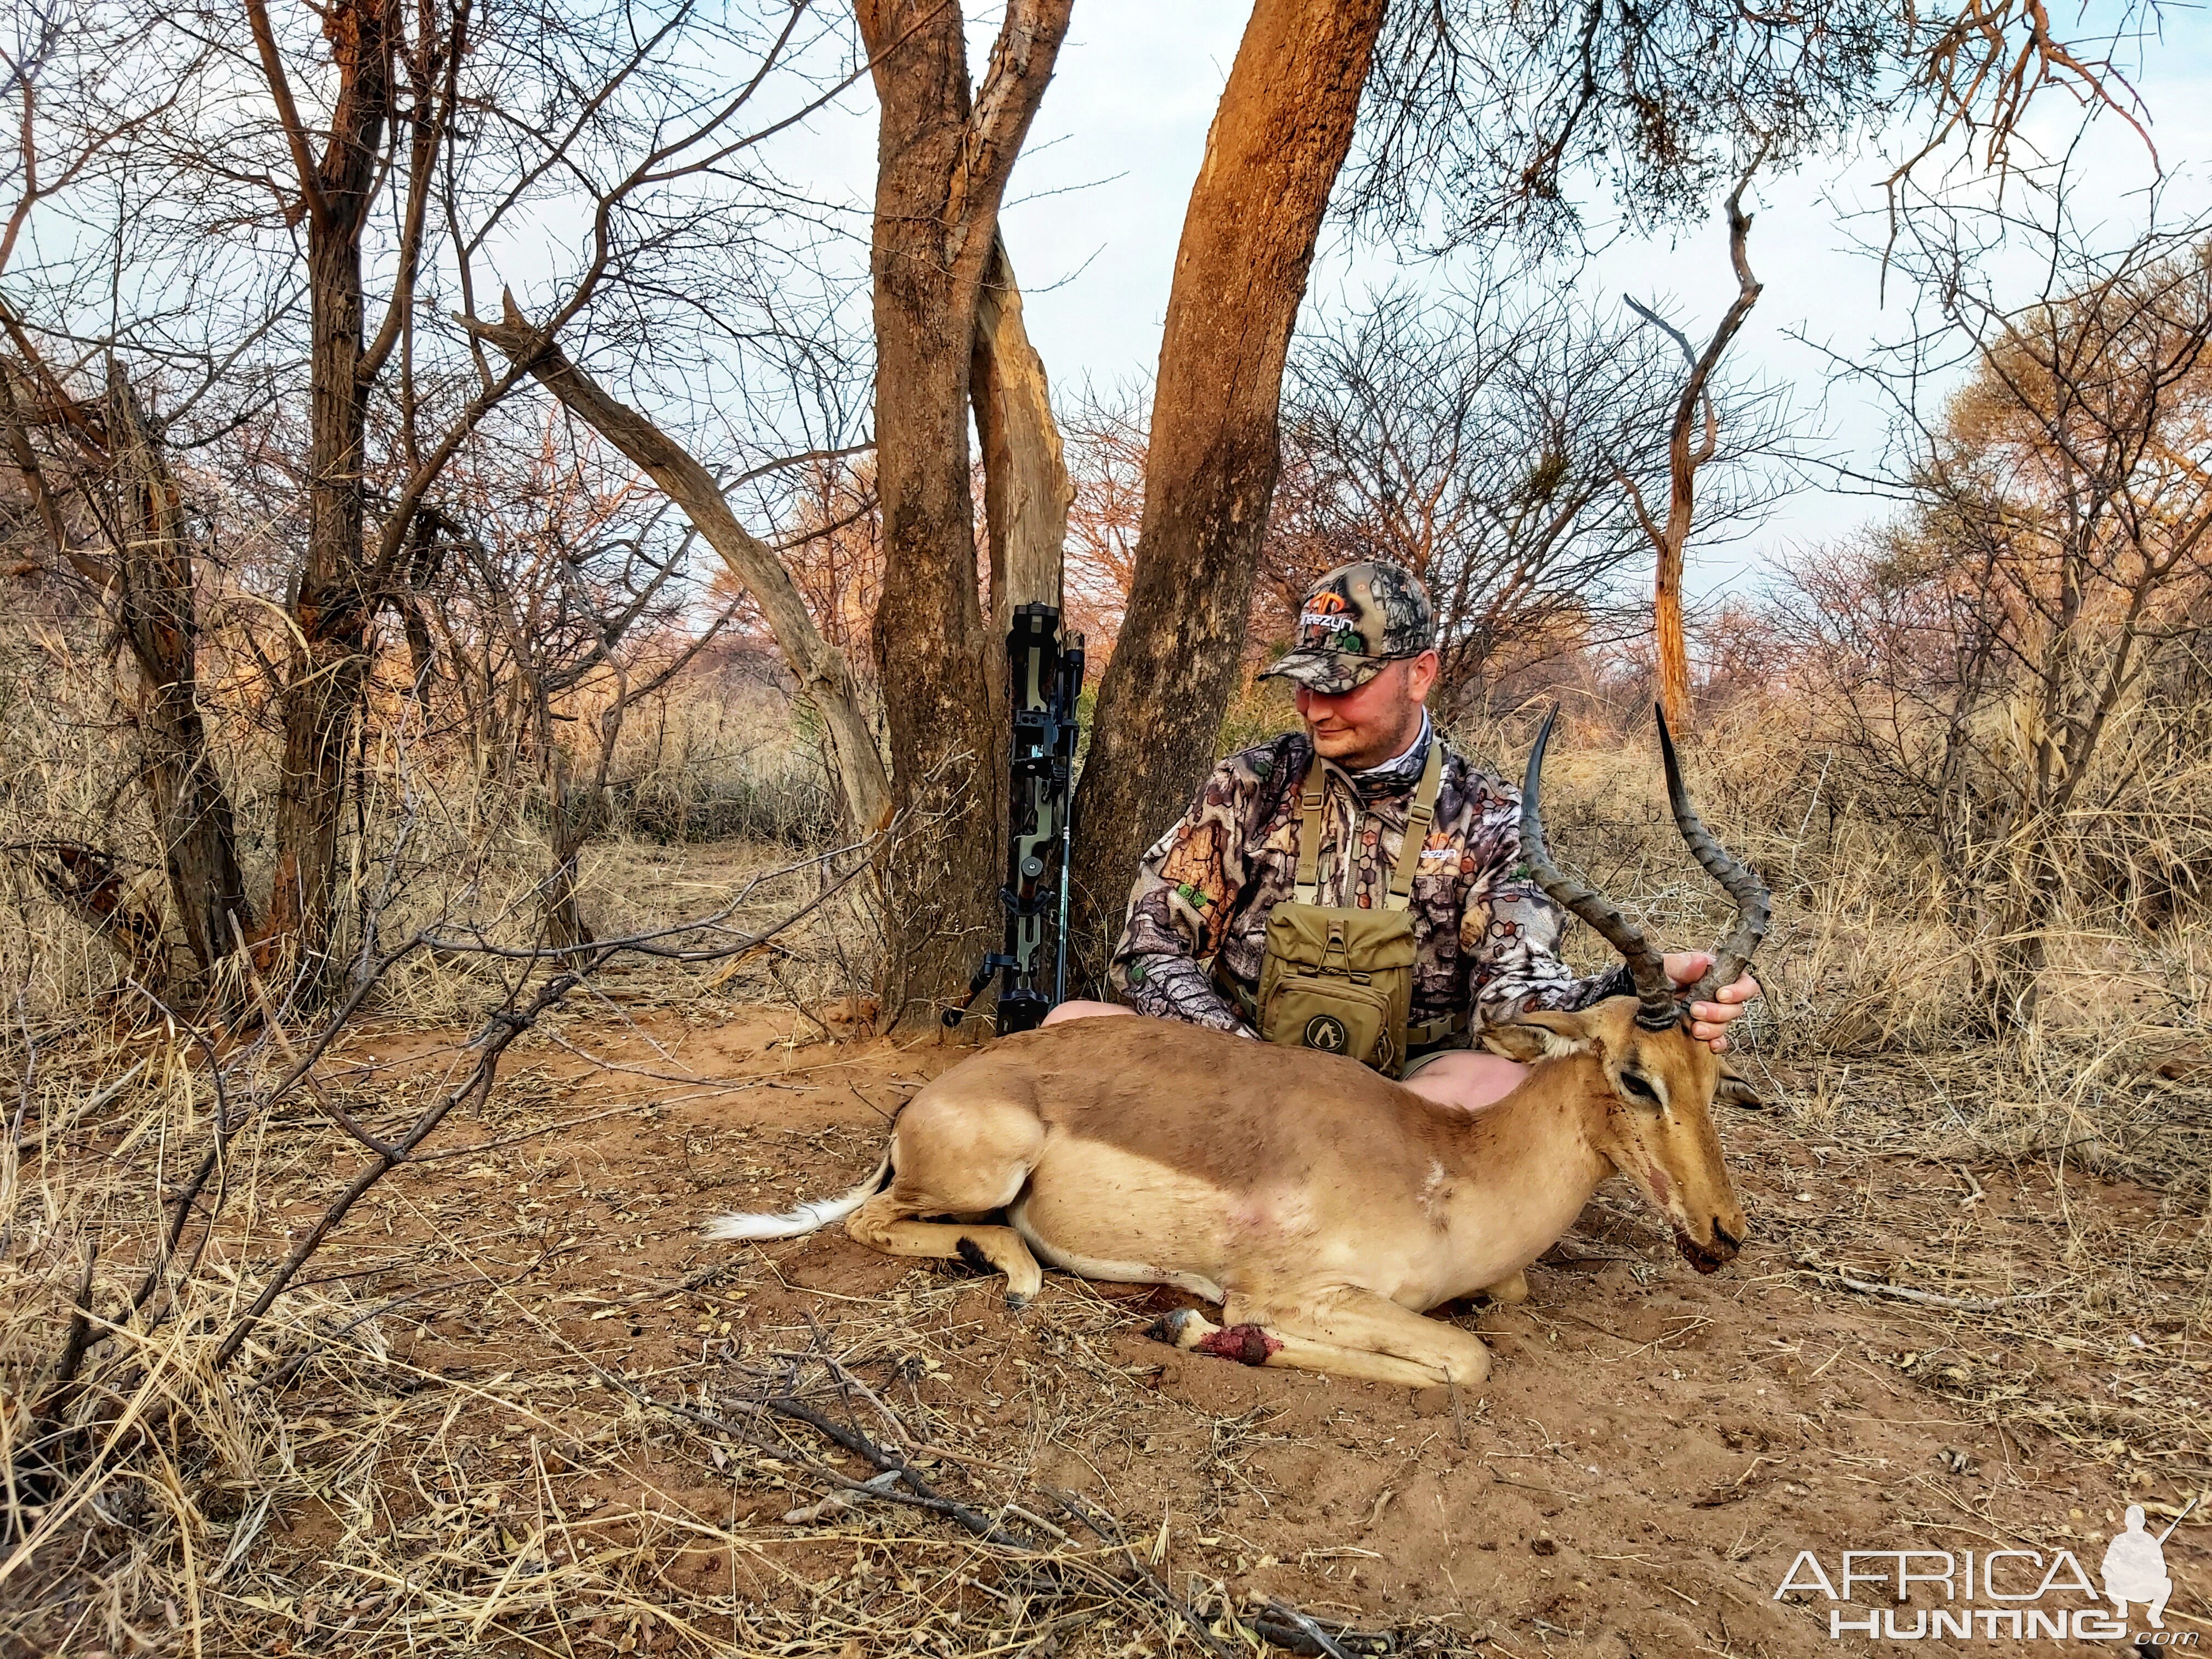 Southern Impala “Aepyceros Melampus” Bowhunting South Africa